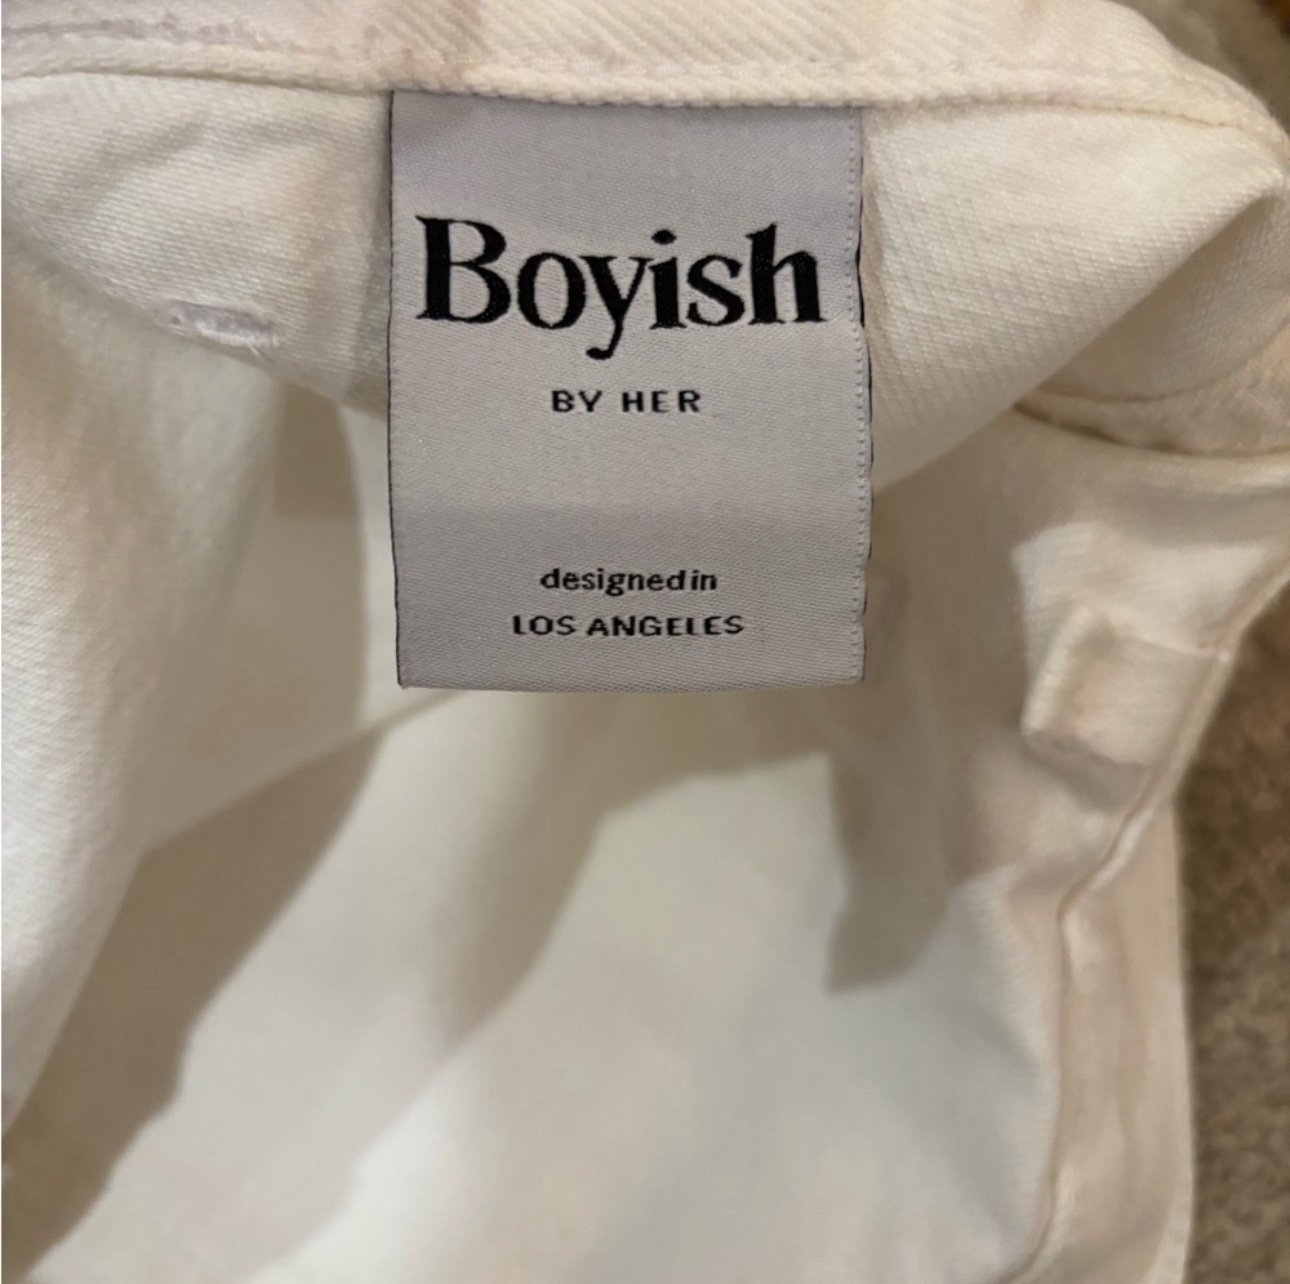 NW - Boyish By Her Tony Bus Stop Hi-Rise White Jean Shorts - 29 fwhEnX5no